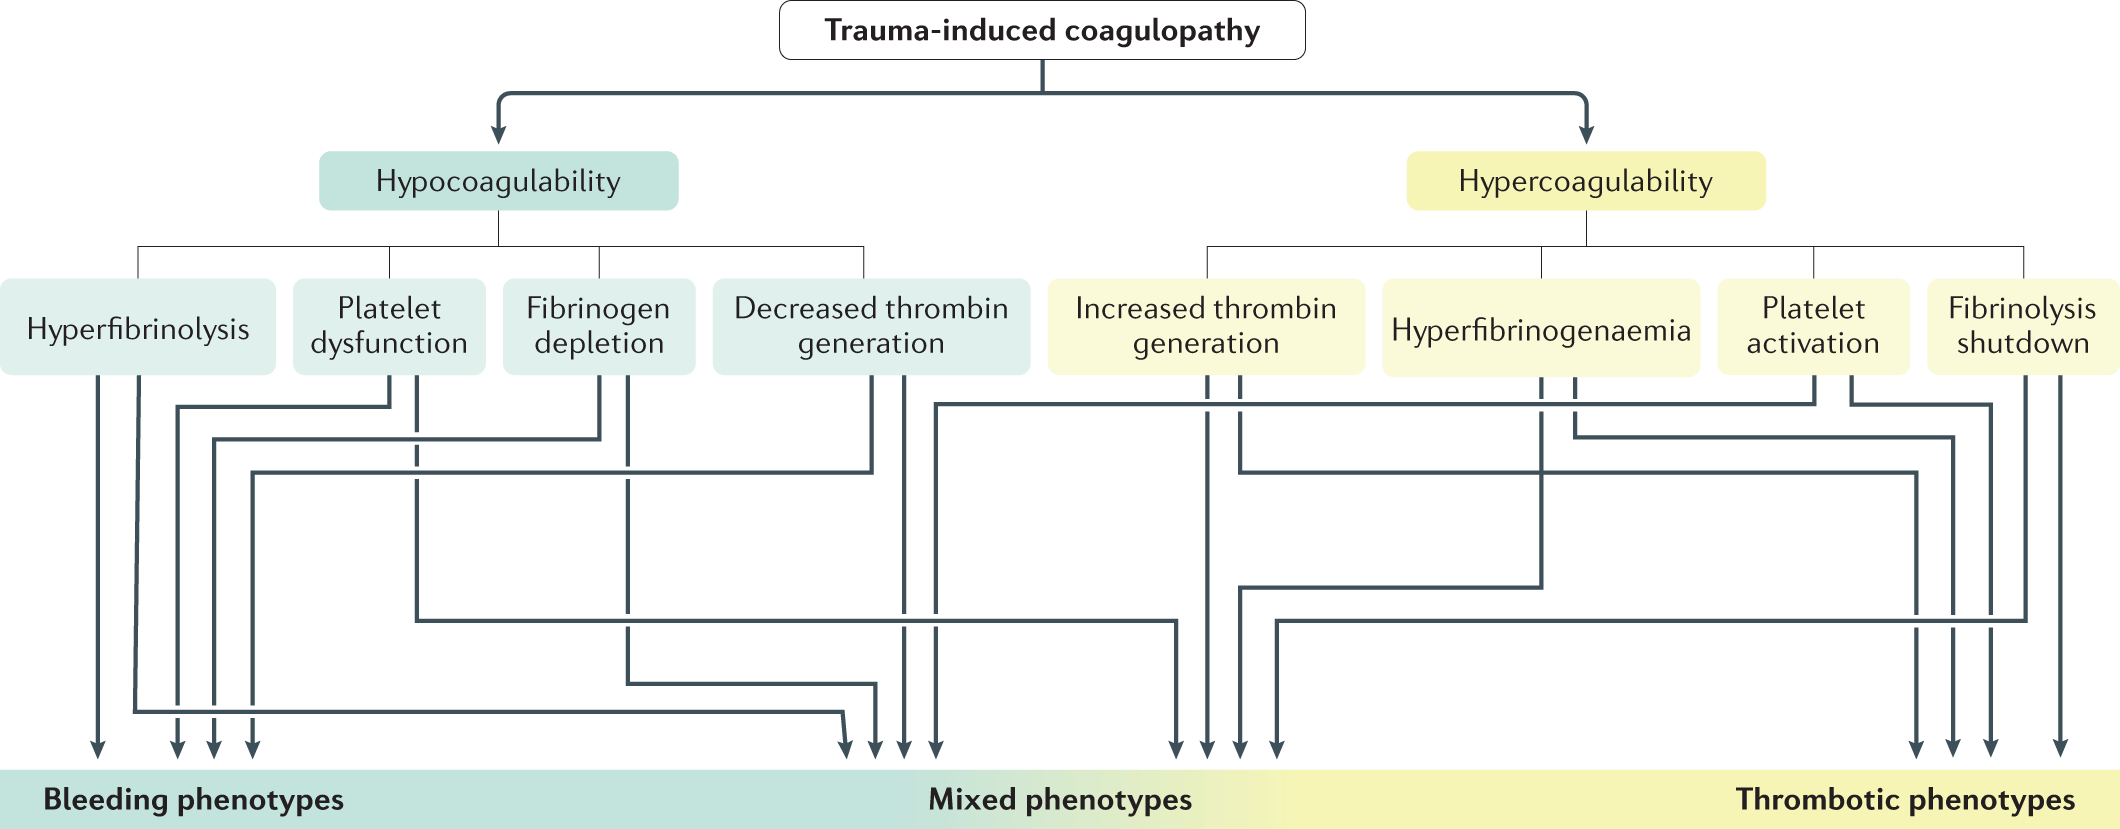 Trauma-induced coagulopathy  Nature Reviews Disease Primers